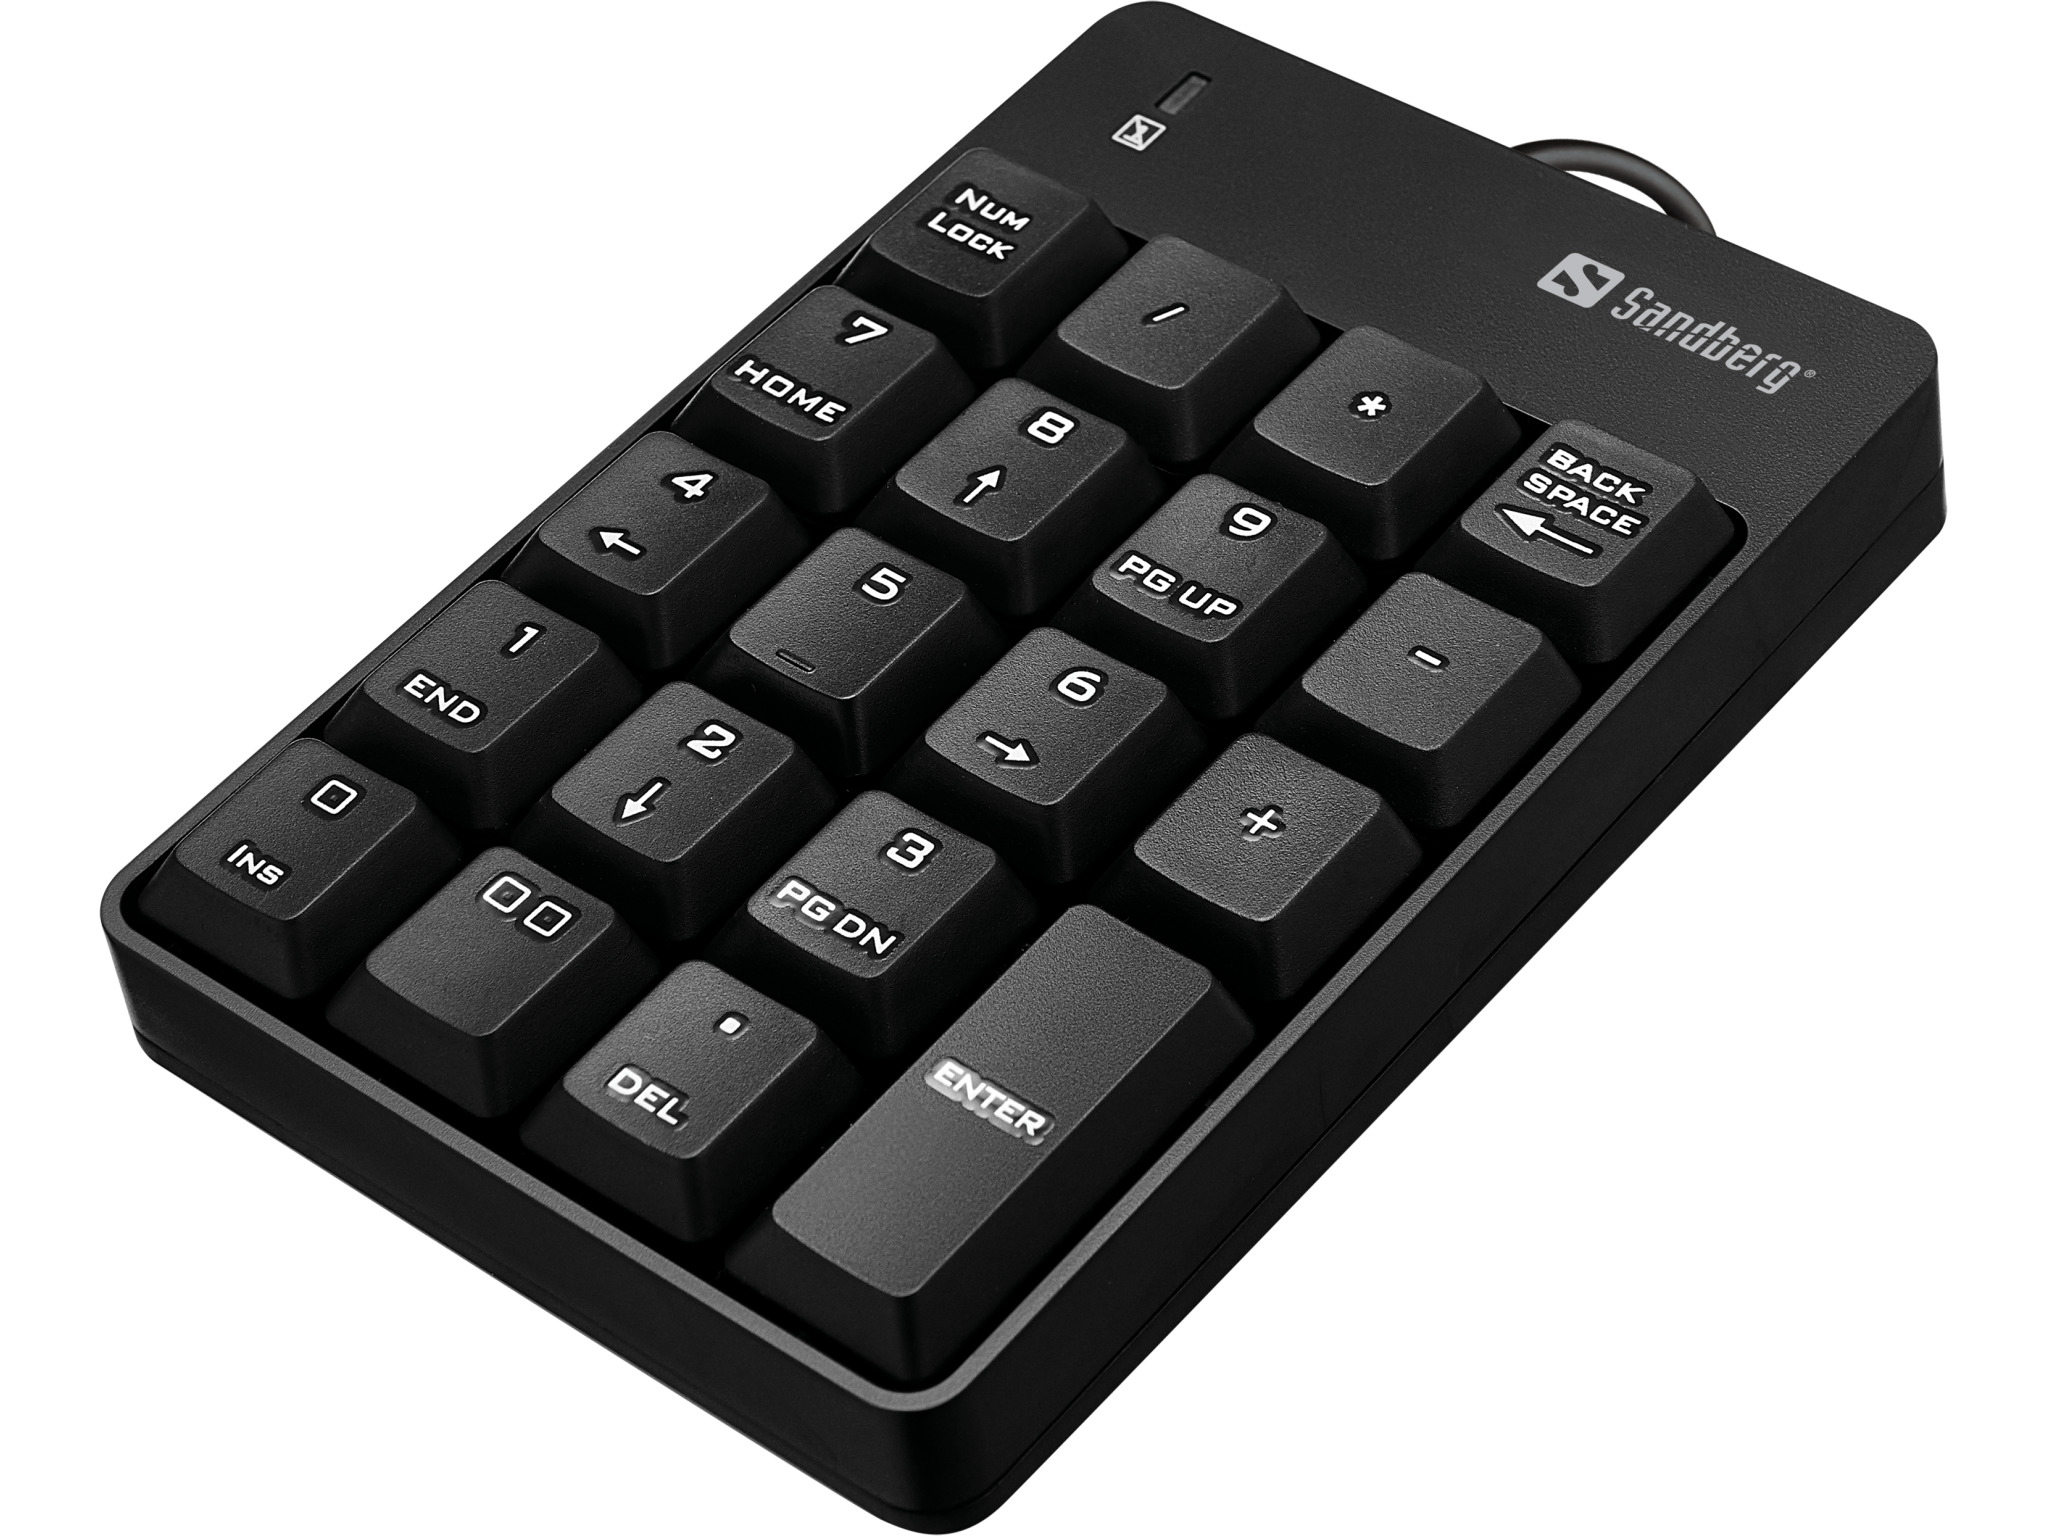 Helder op Overleven Cusco Sandberg USB Wired Numeric Keypad (630-07) kopen » Centralpoint